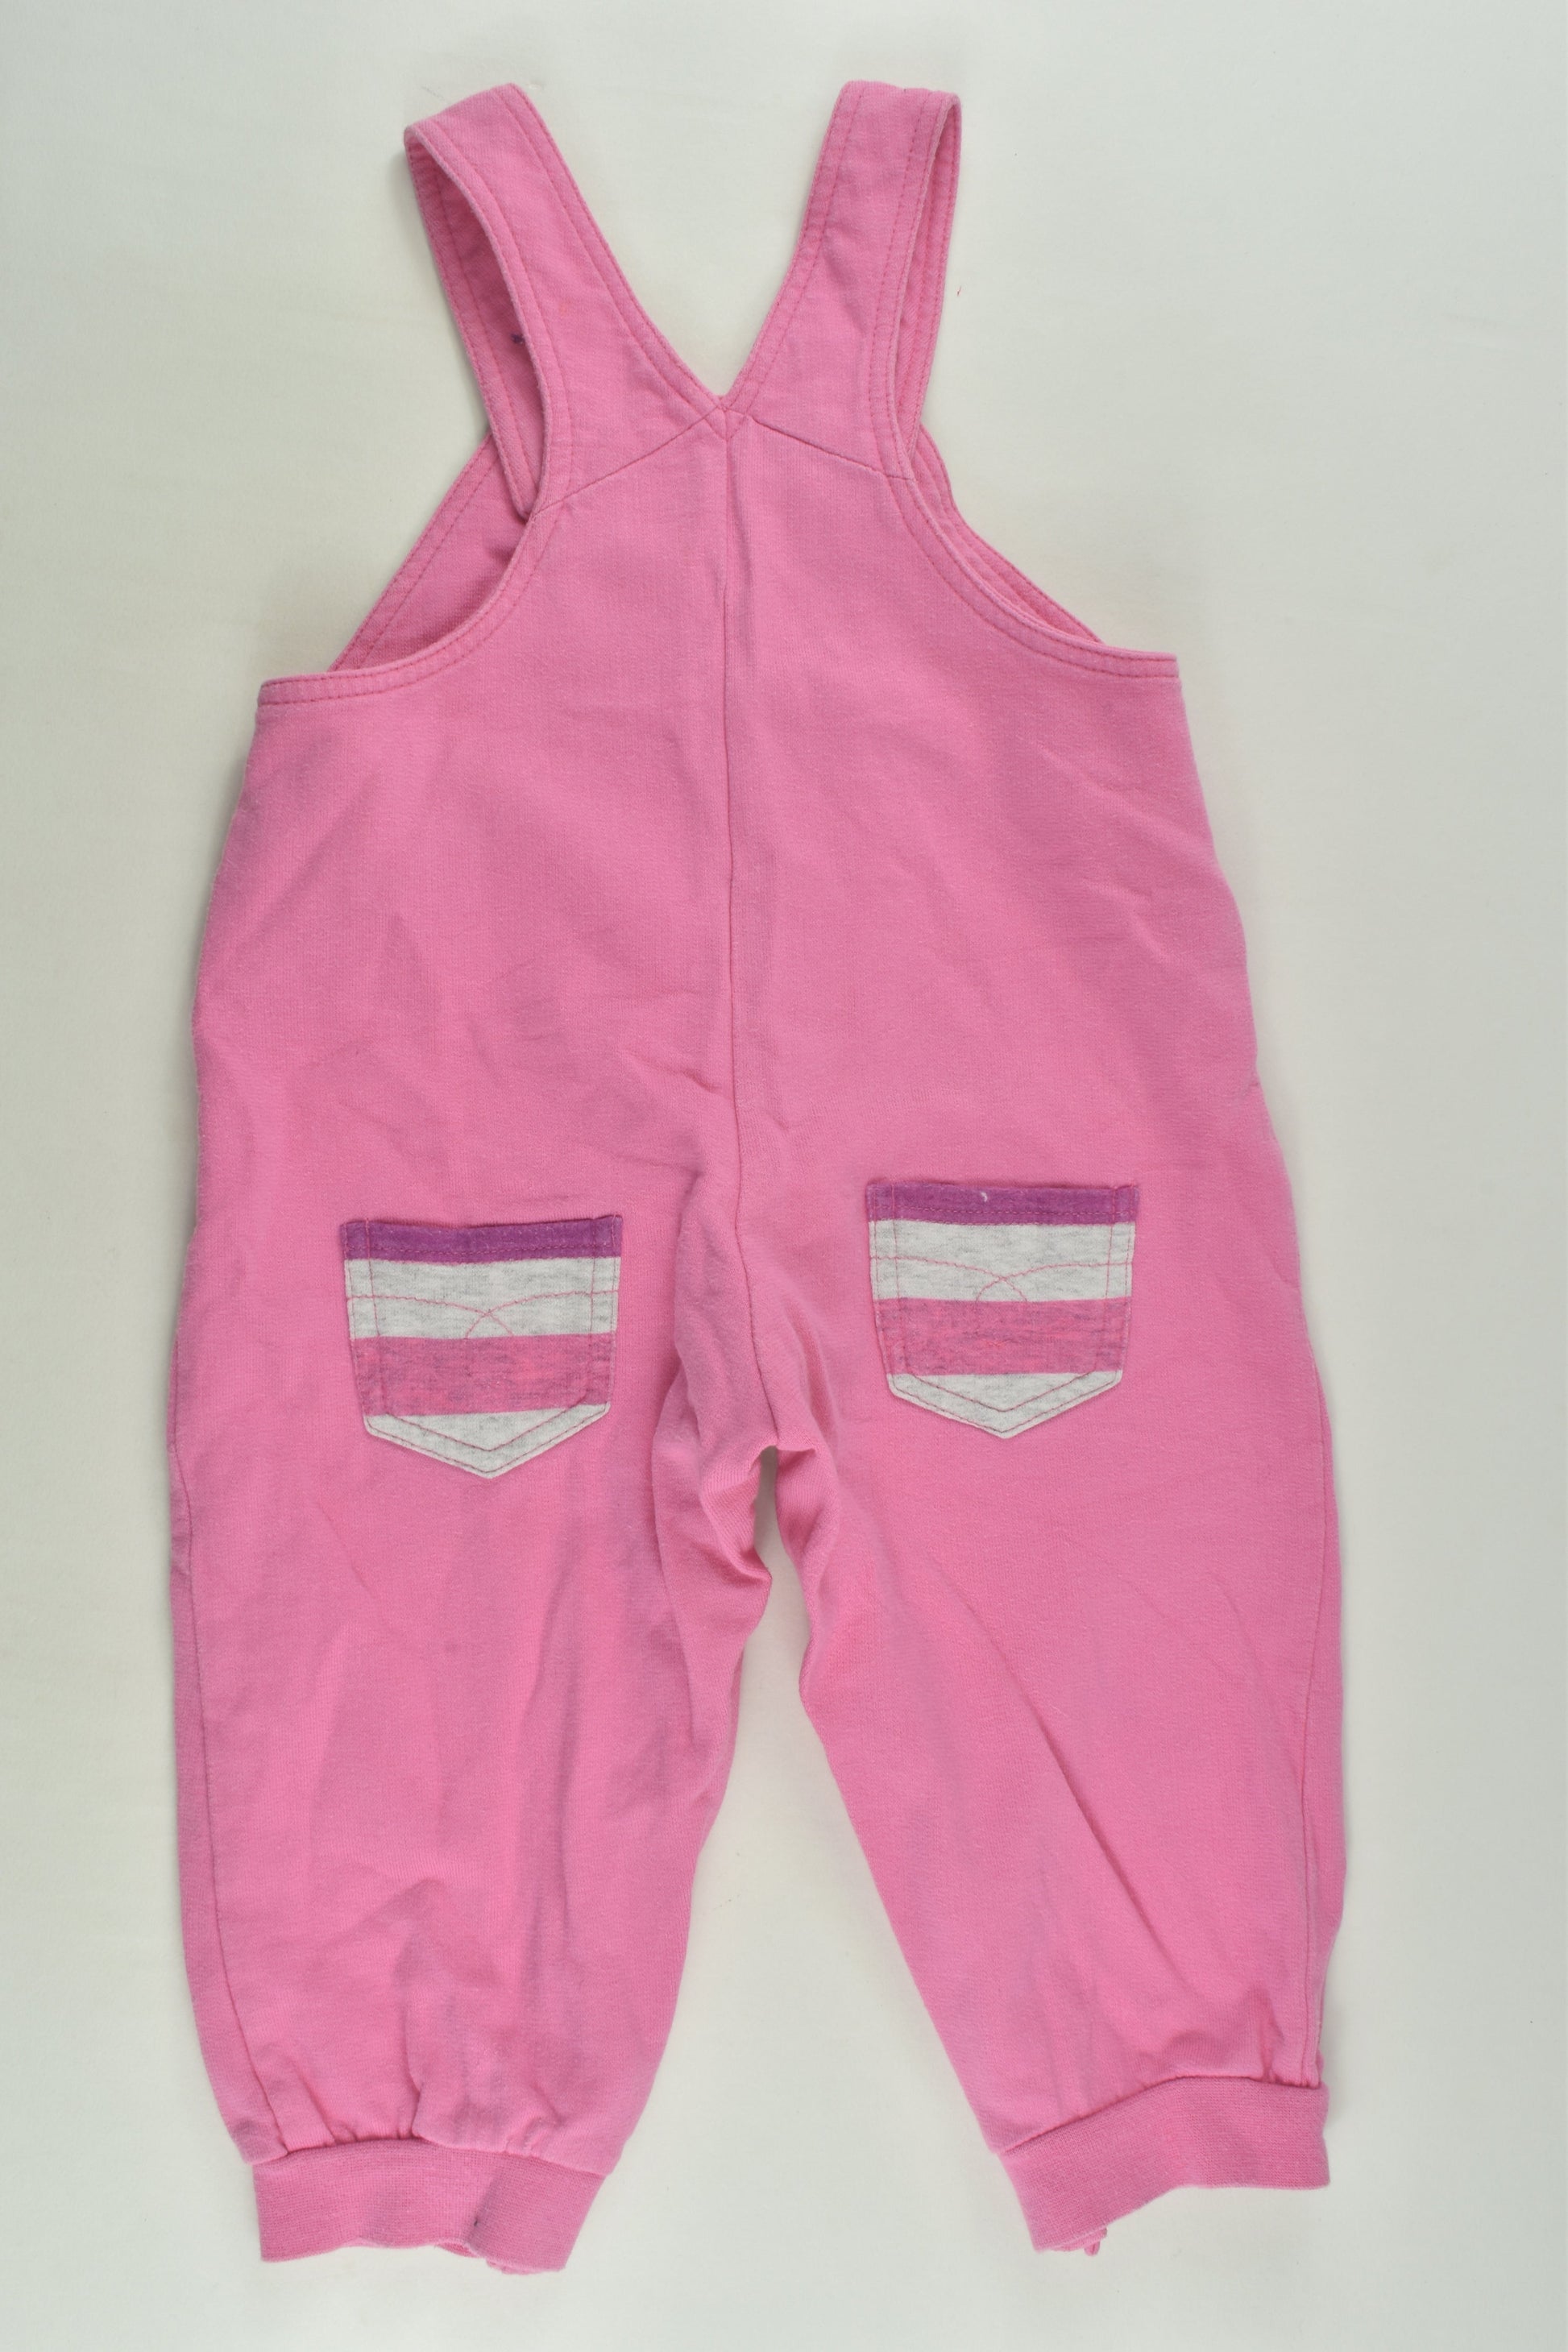 Finnwear Size 00 (68 cm) Overalls